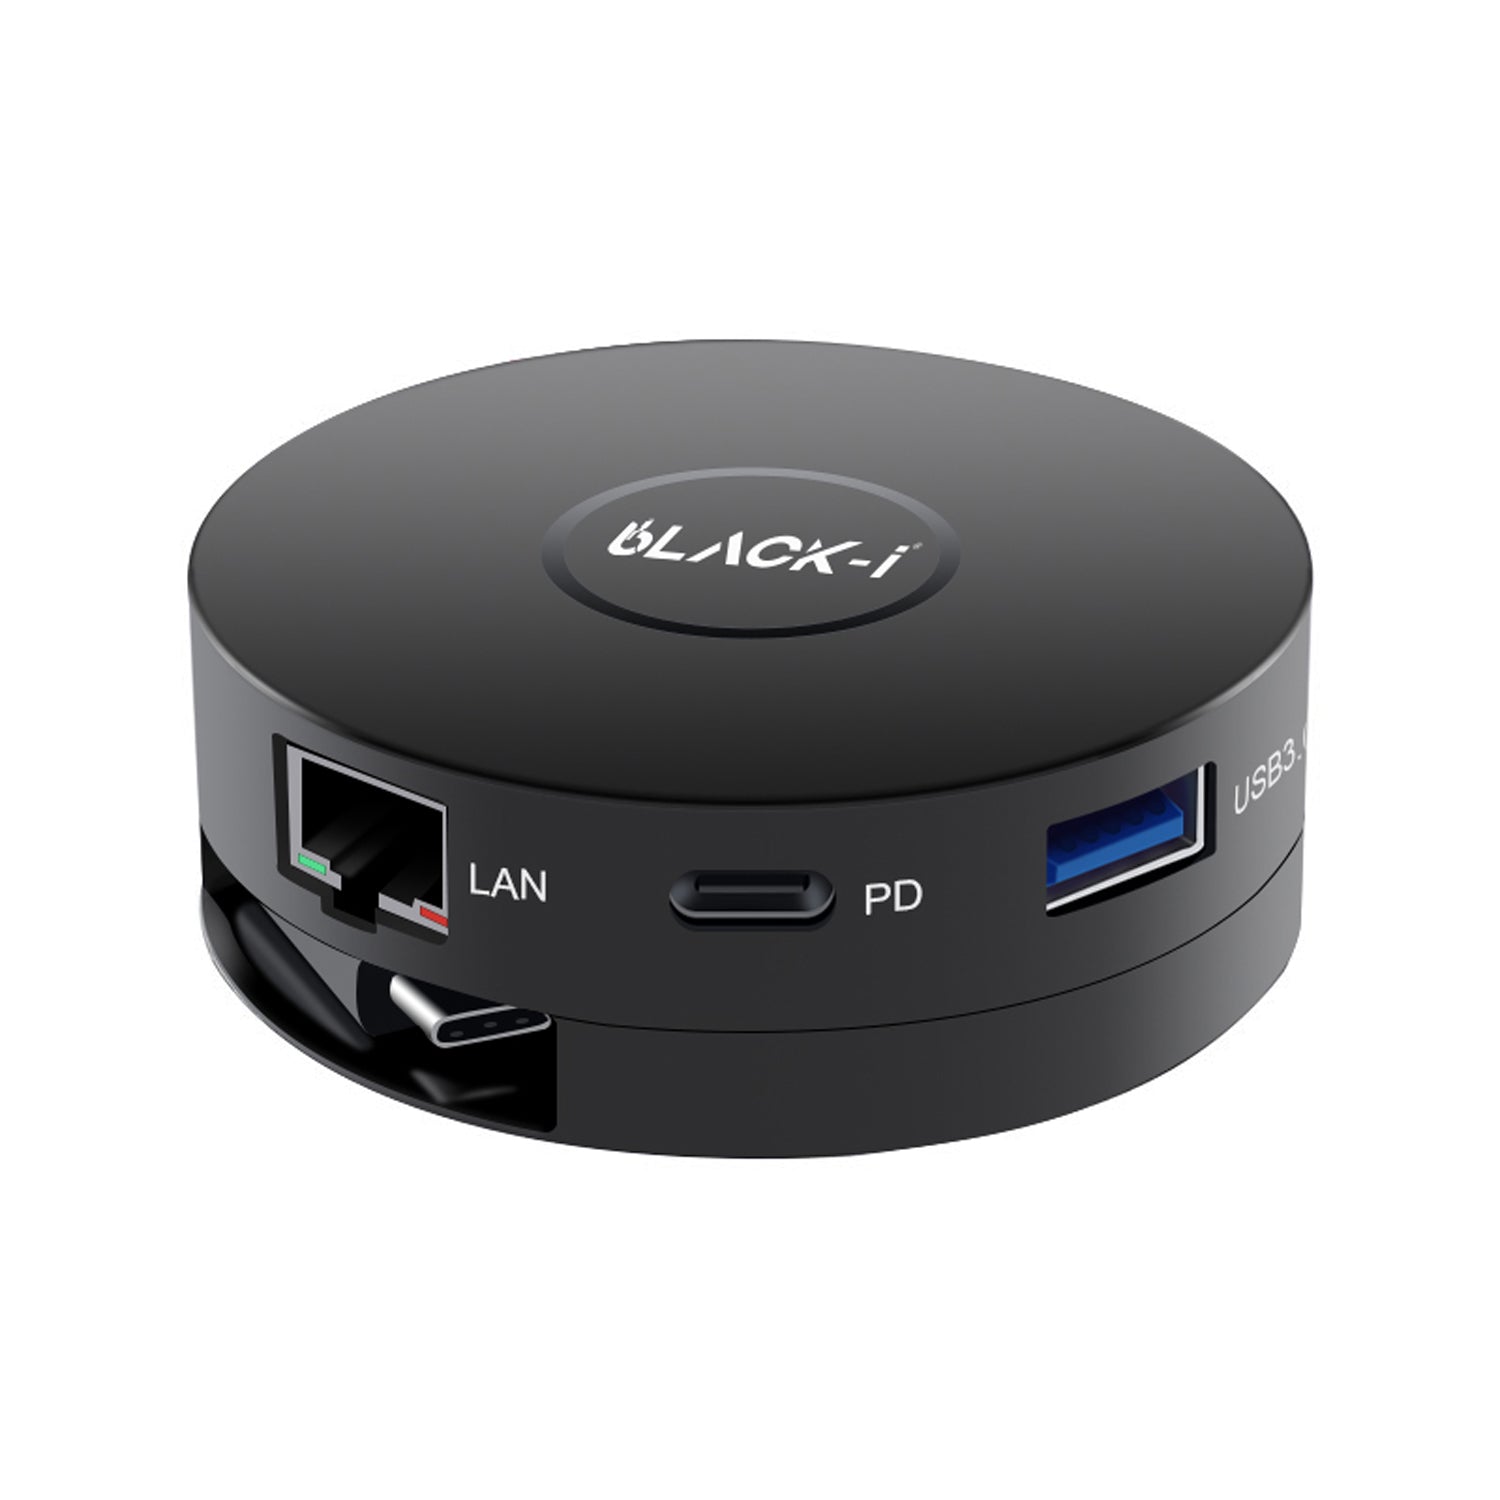 Black-i USB-C 6-in-1 Hub – HDMI, VGA, DP, USB 3.0, Gigabit LAN, USB 3.0 & PD – Versatile Connectivity for Superior Productivity and Multimedia Enhancement